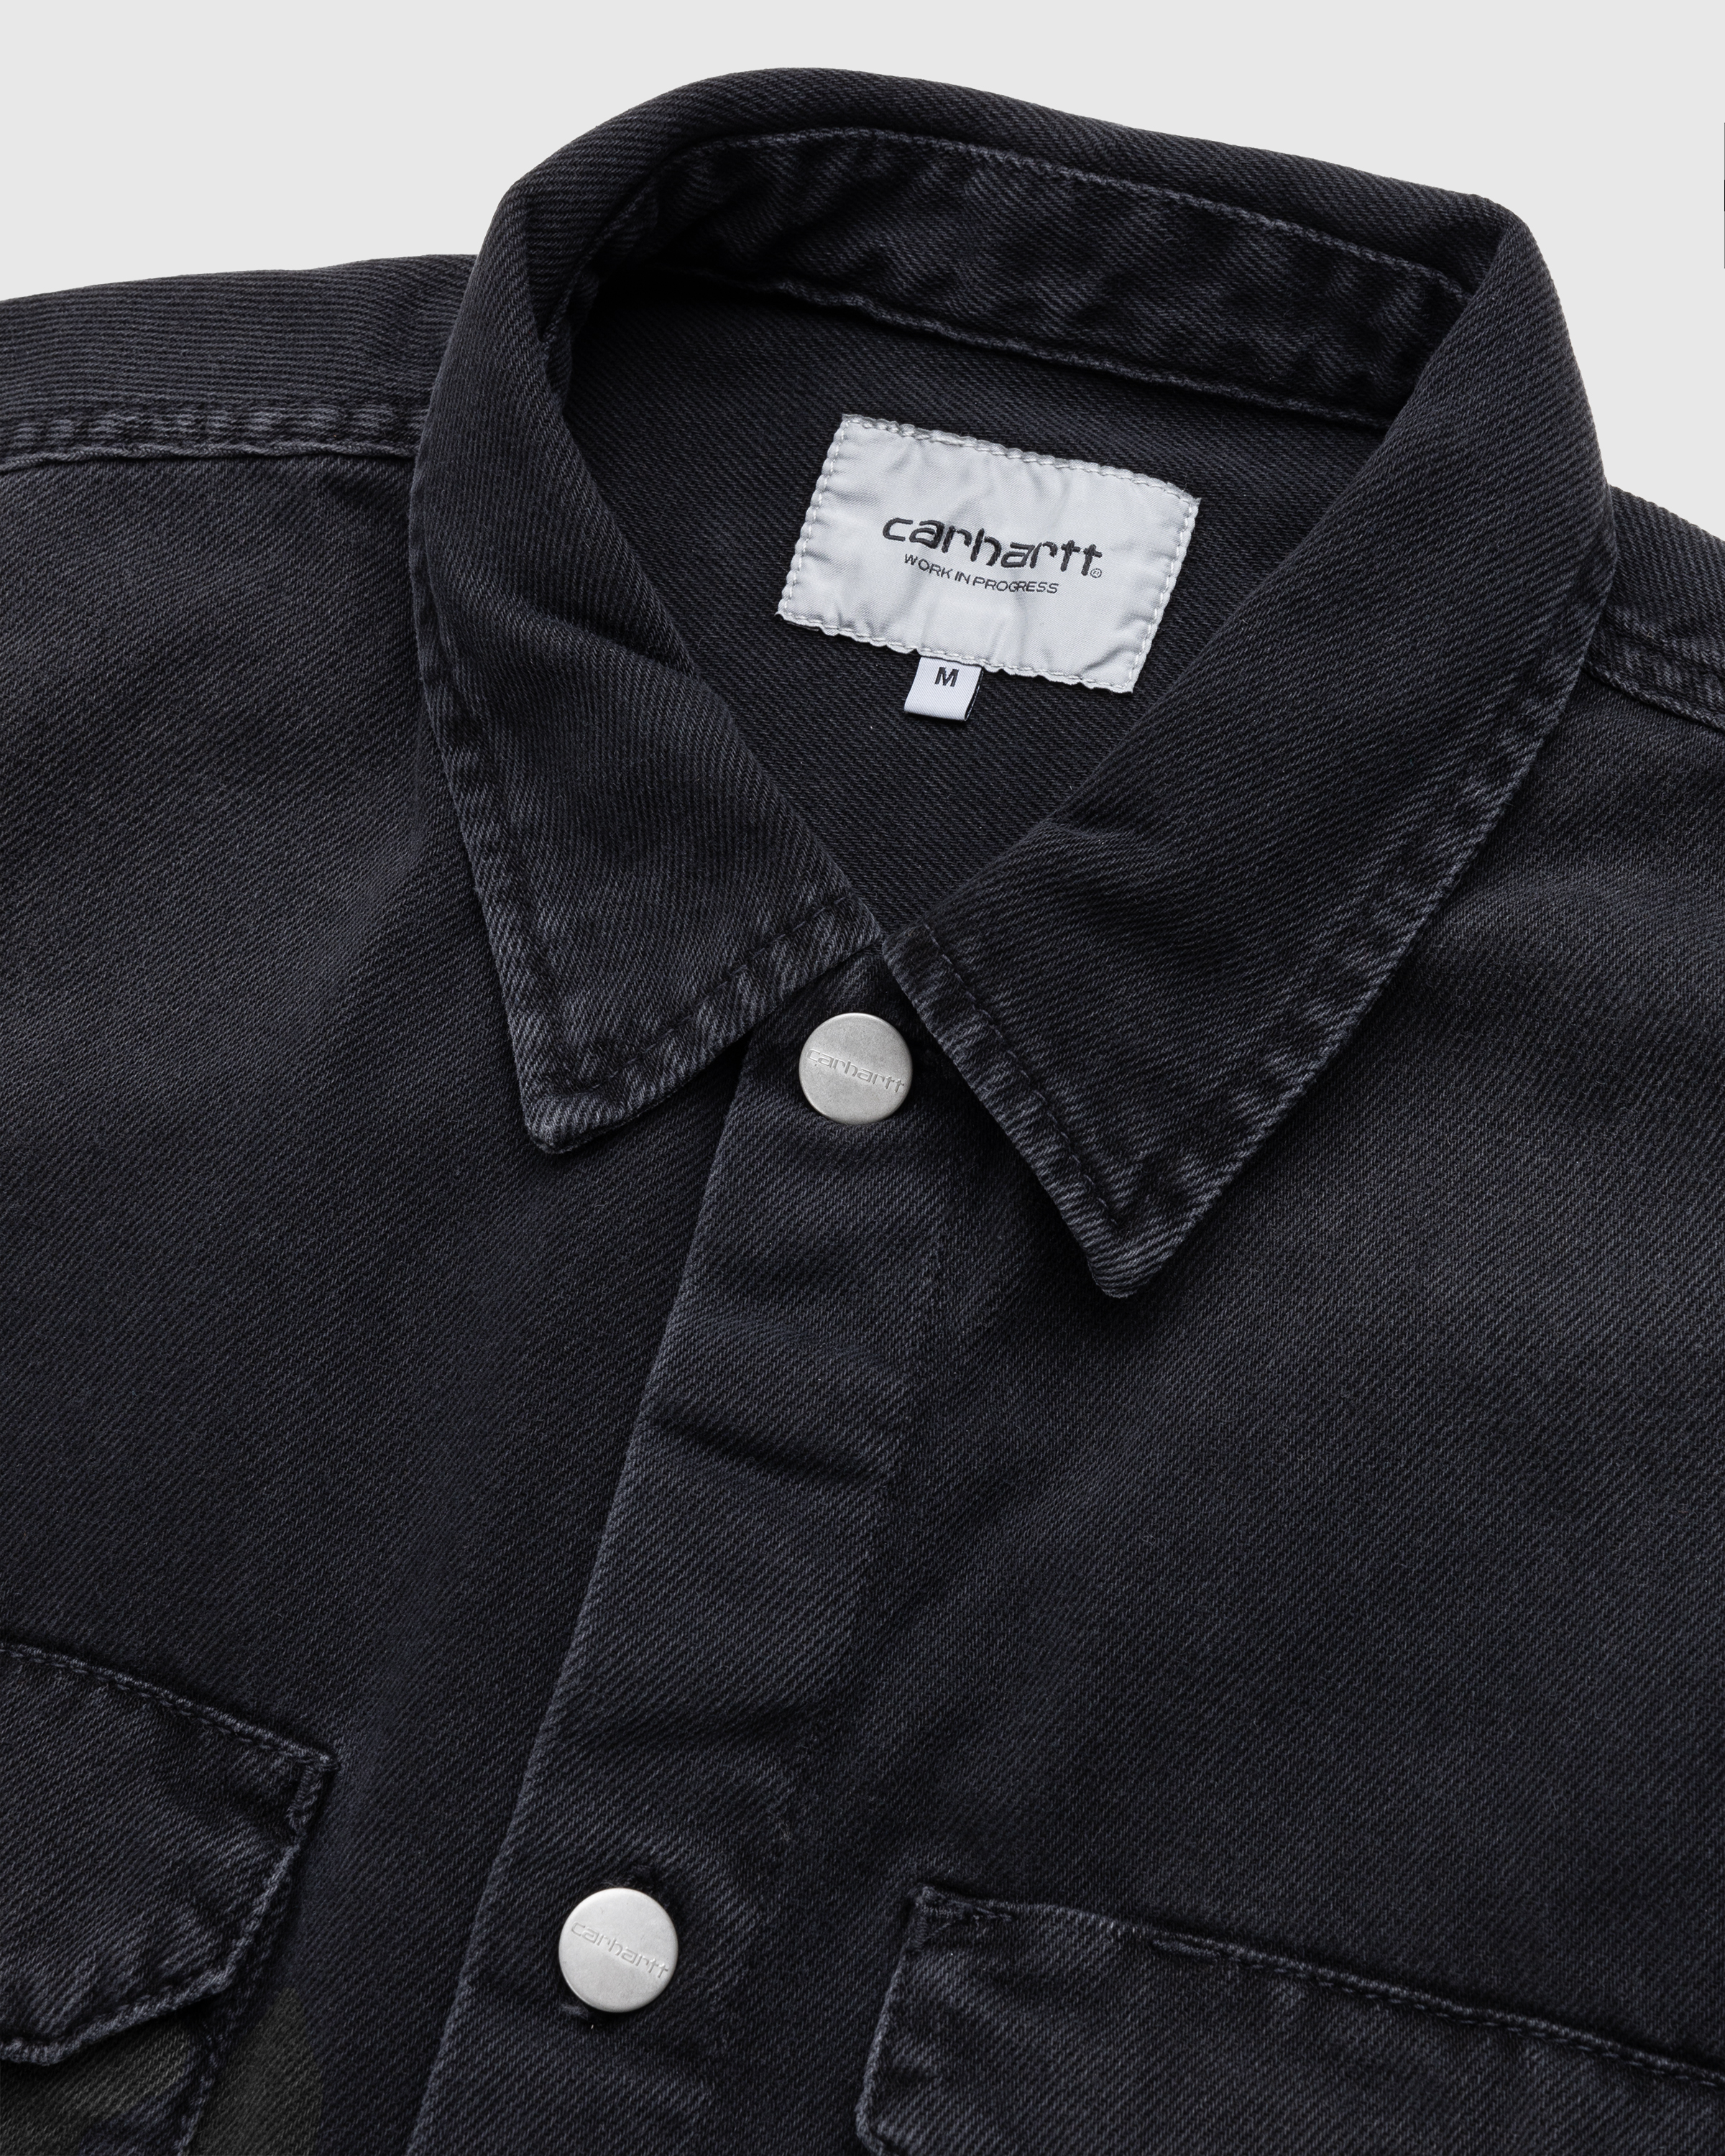 Carhartt WIP – Harvey Shirt Jacket Black/Dark Used Wash - Shirts - Black - Image 6